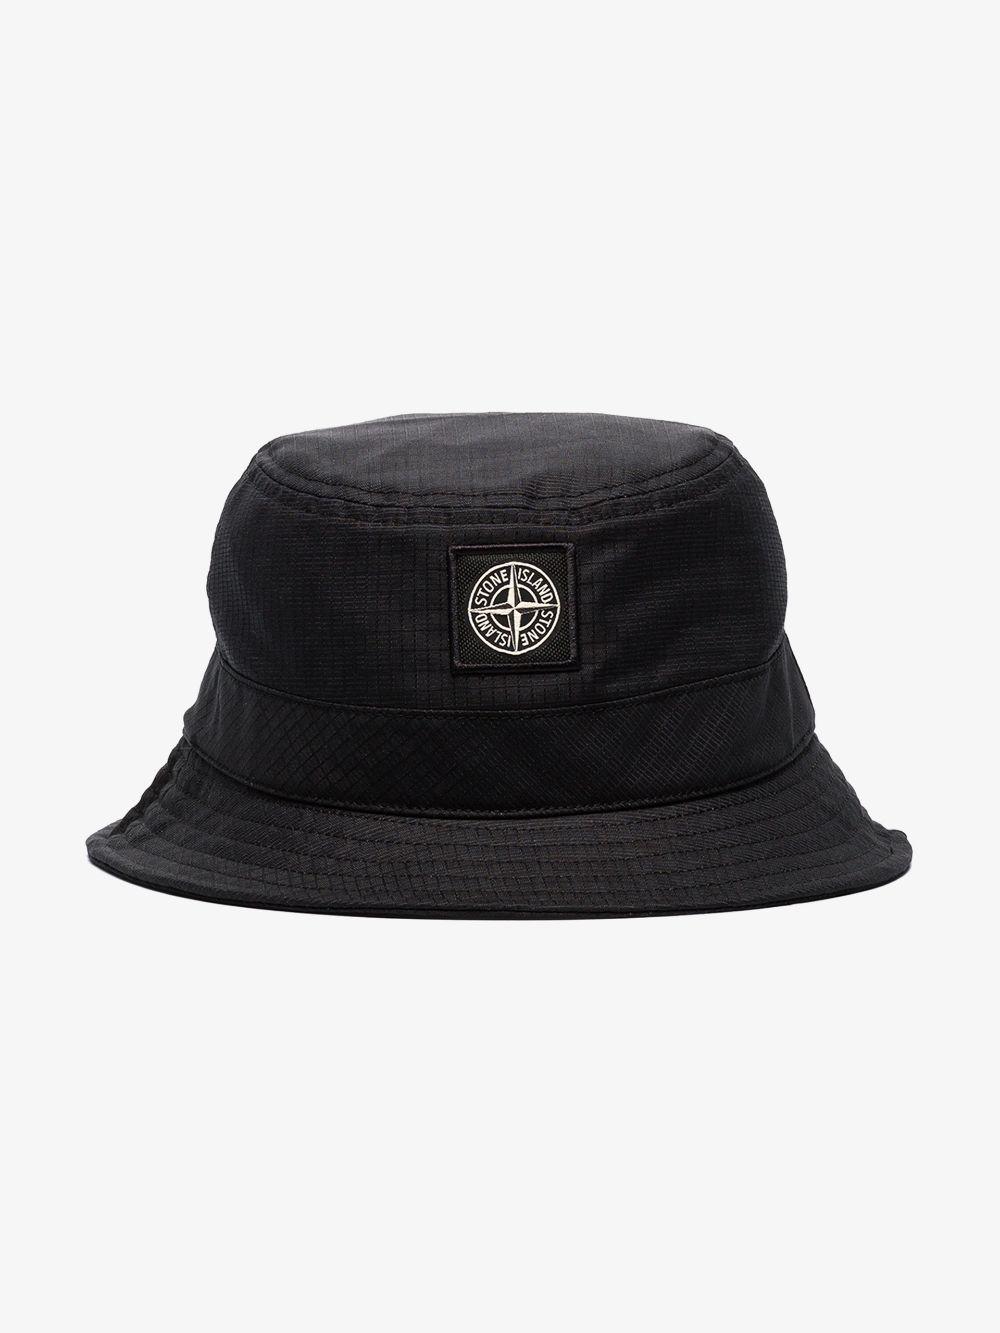 Stone Island Cotton Logo Bucket Hat In Black for Men - Lyst